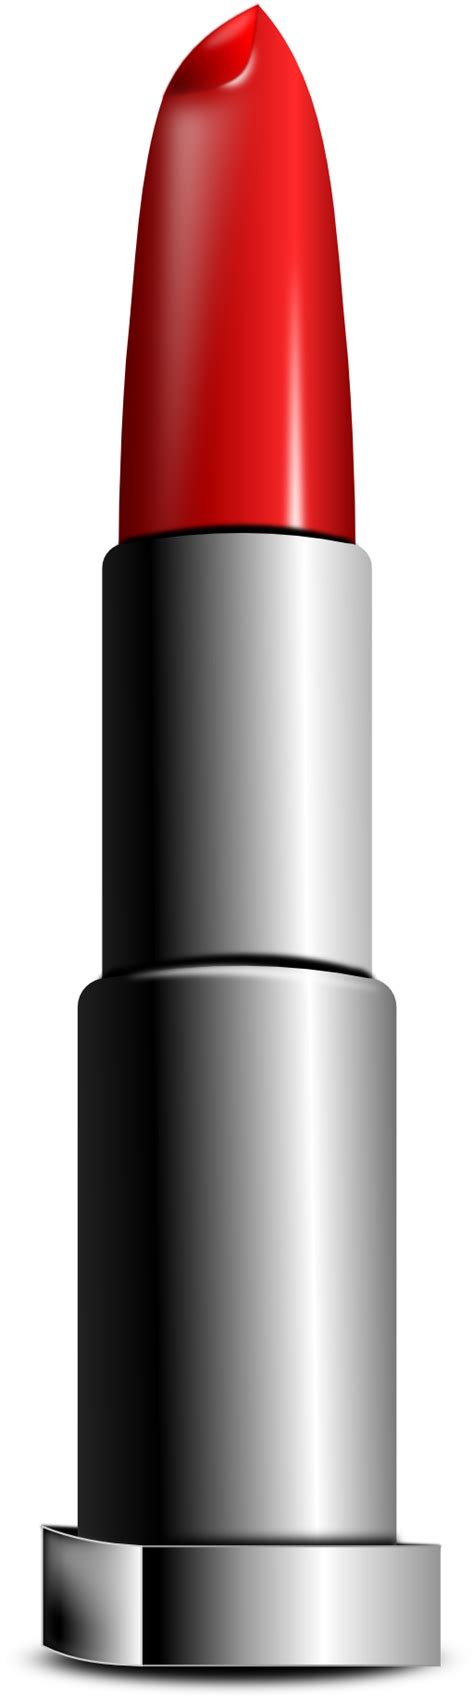 Lipstick Png Transparent Image Download Size 512x1834px